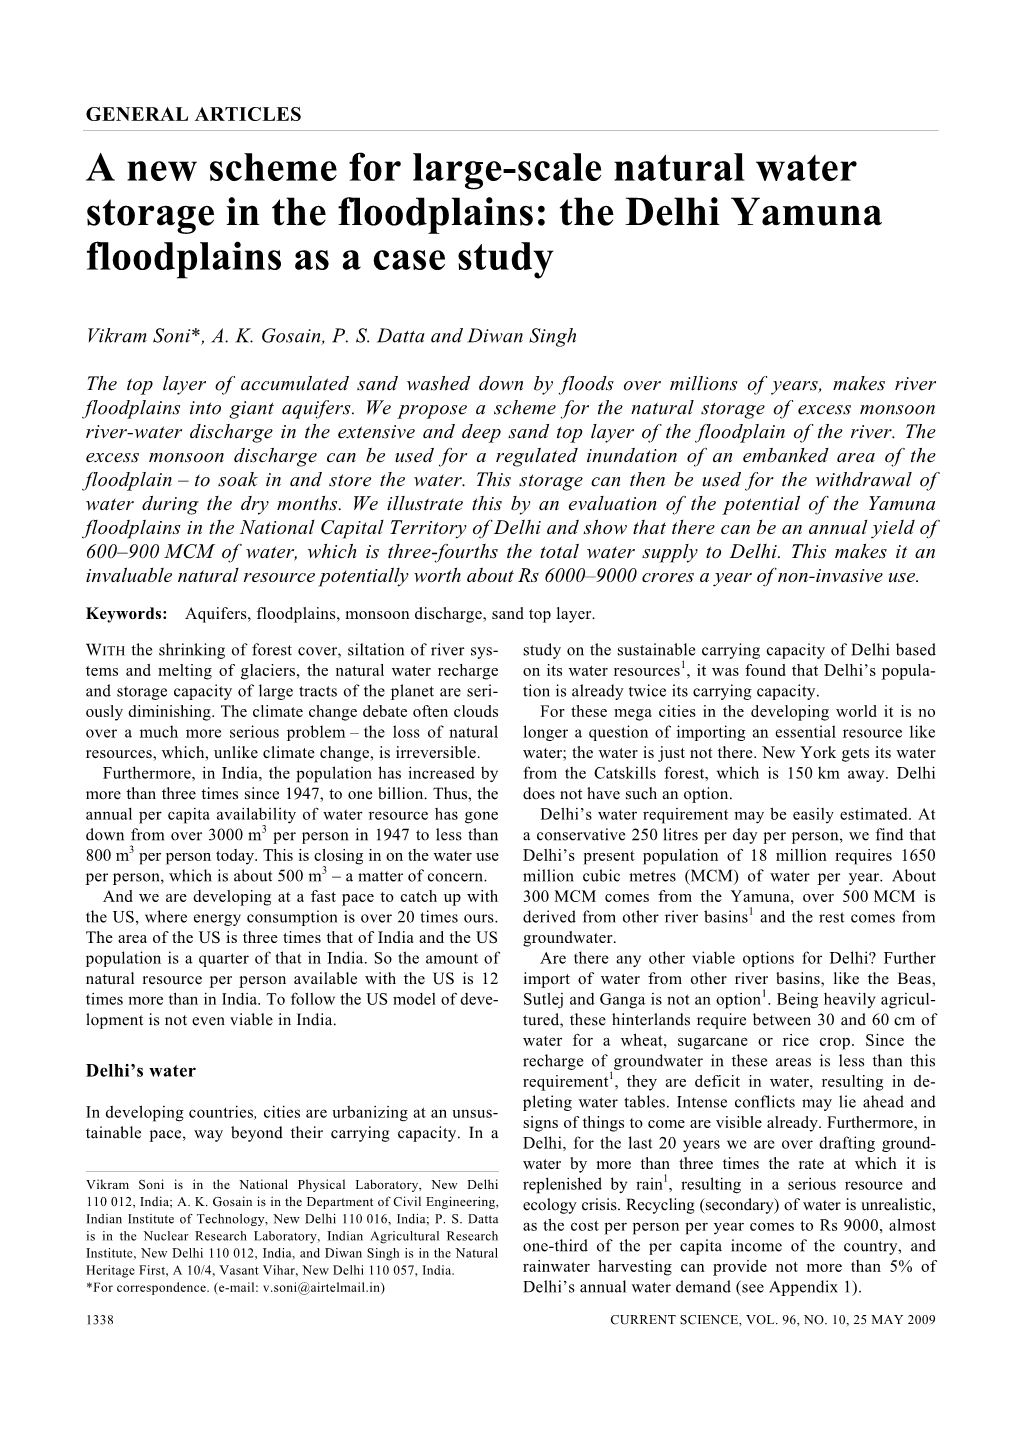 The Delhi Yamuna Floodplains As a Case Study